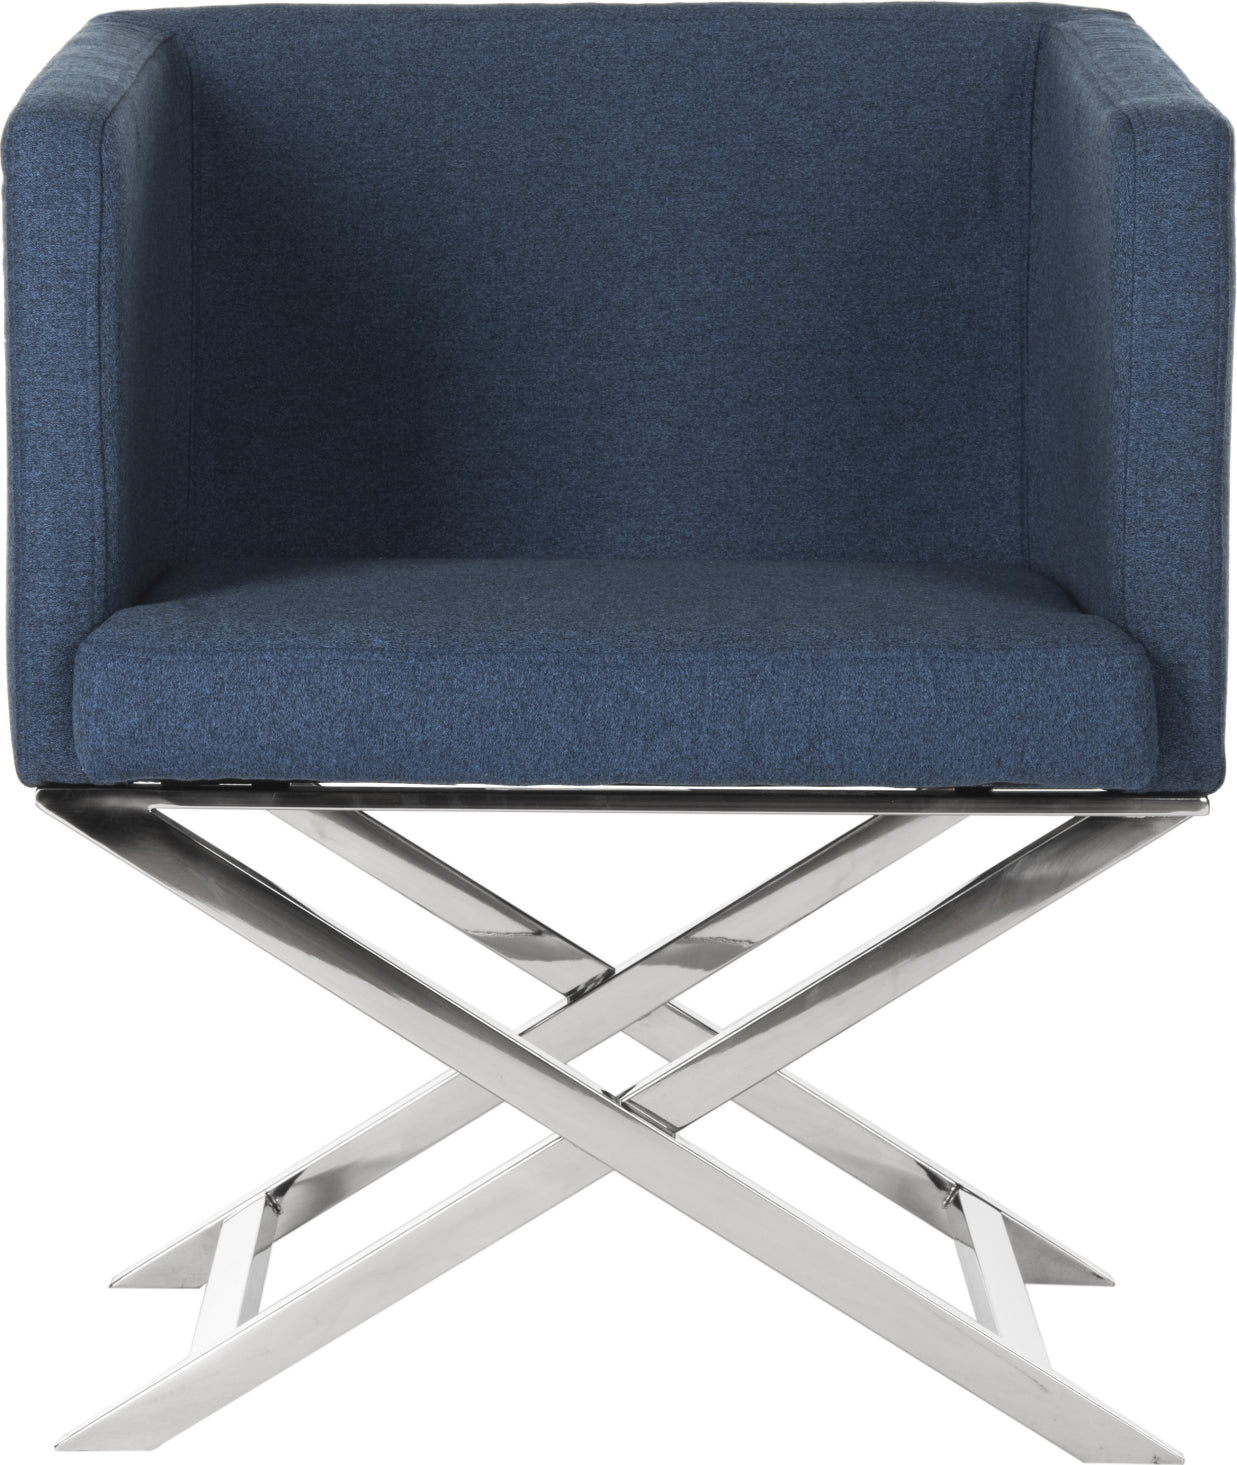 Safavieh Celine Chrome Cross Leg Chair Navy and Furniture main image